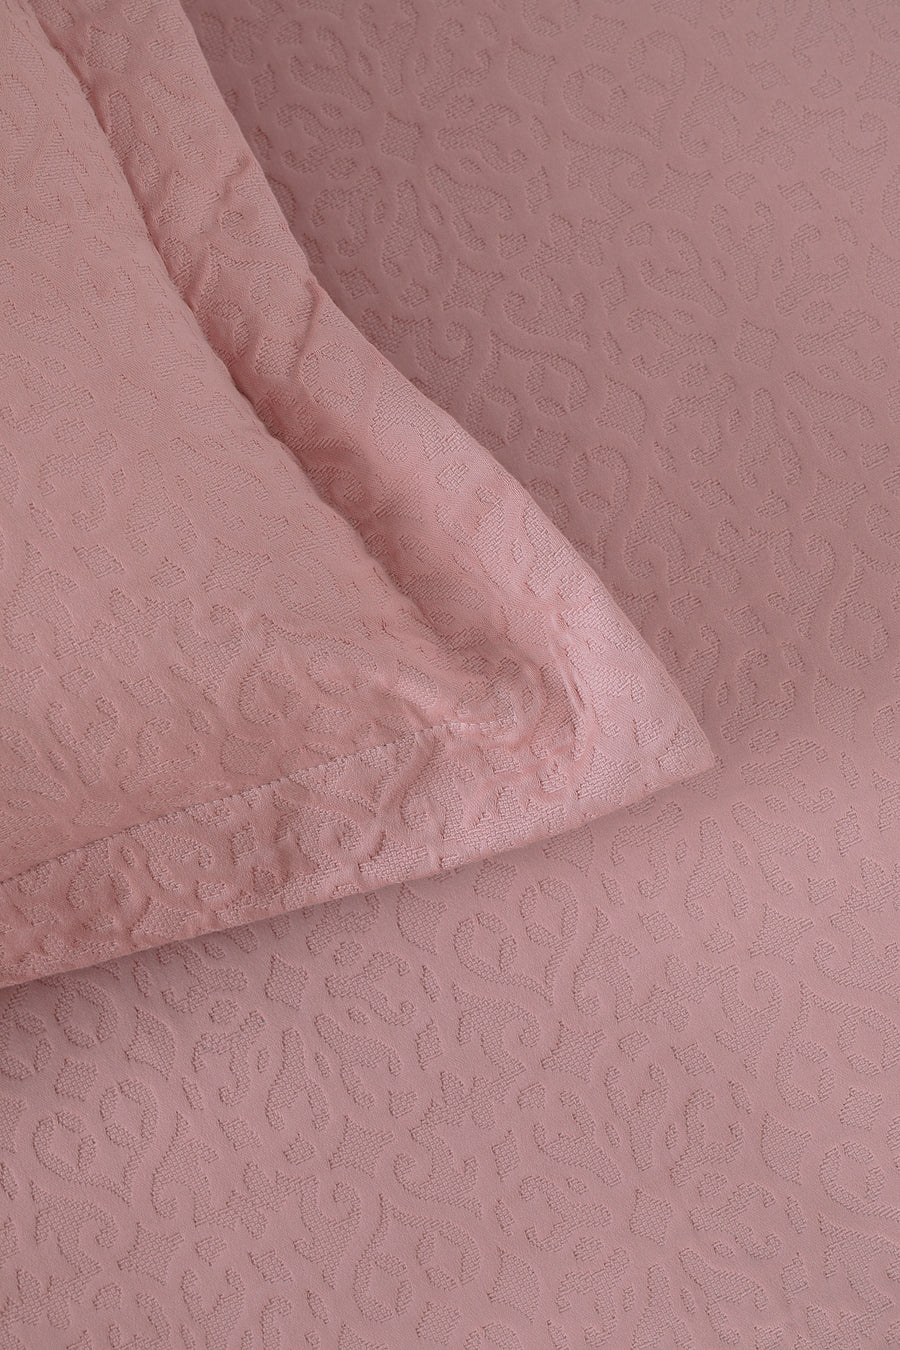 Lattice Blush Pink Bedspread Set